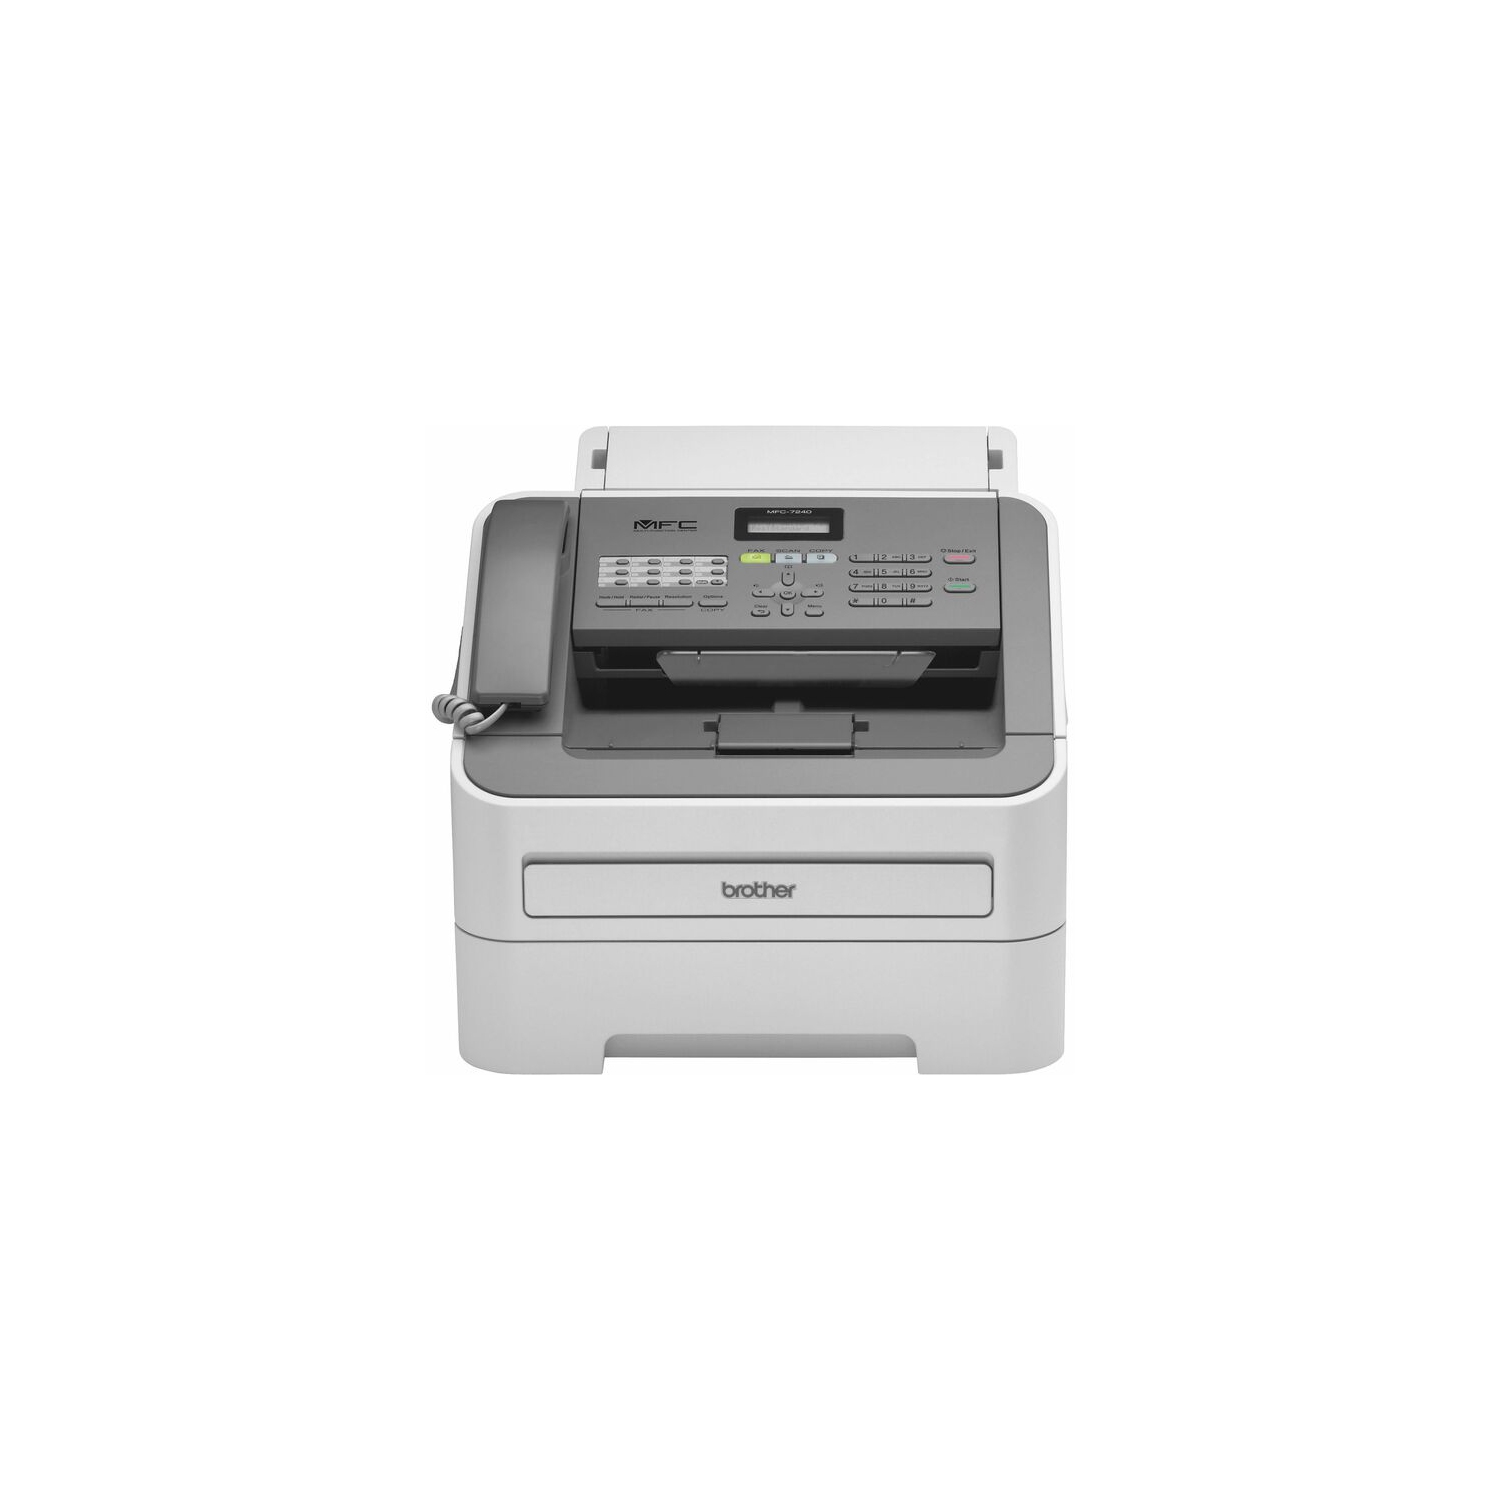 Brother MFC7240 Multifnctn Compact Laser Printer 16 MB MFC-7240